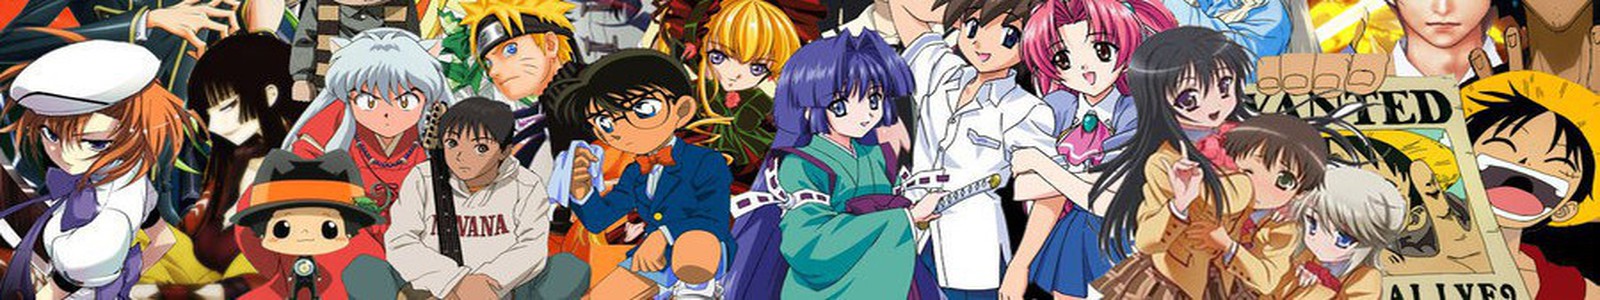 Recomendaciones anime y manga